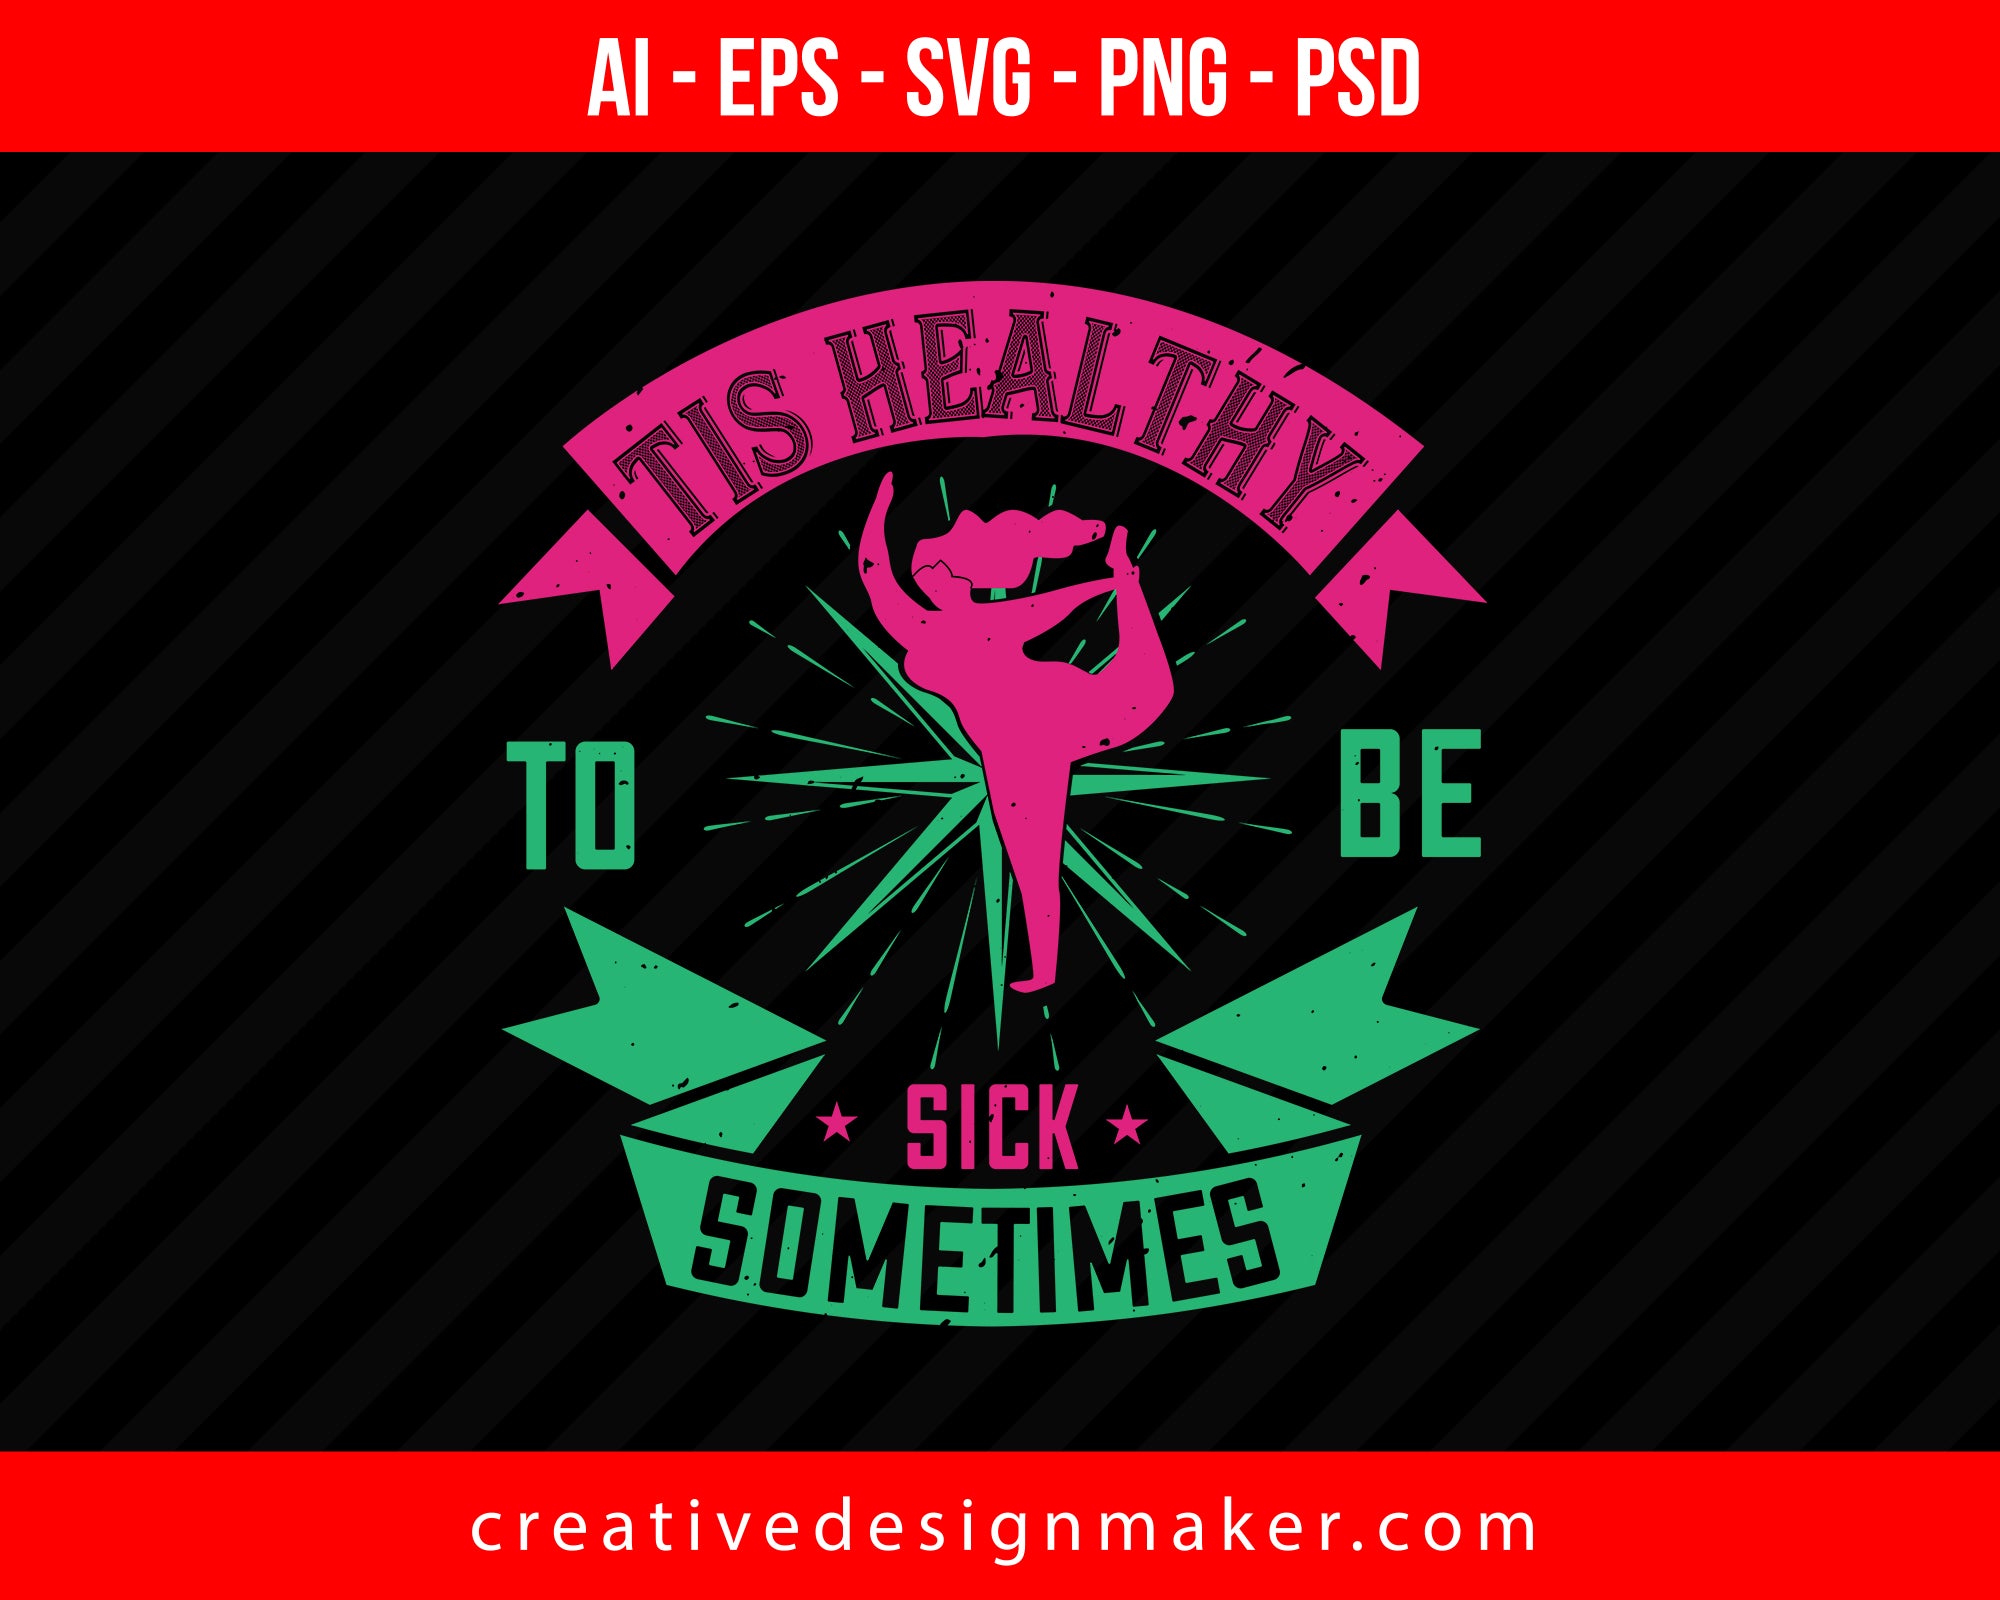 Tis Healthy To Be Sick Sometimes World Health Print Ready Editable T-Shirt SVG Design!